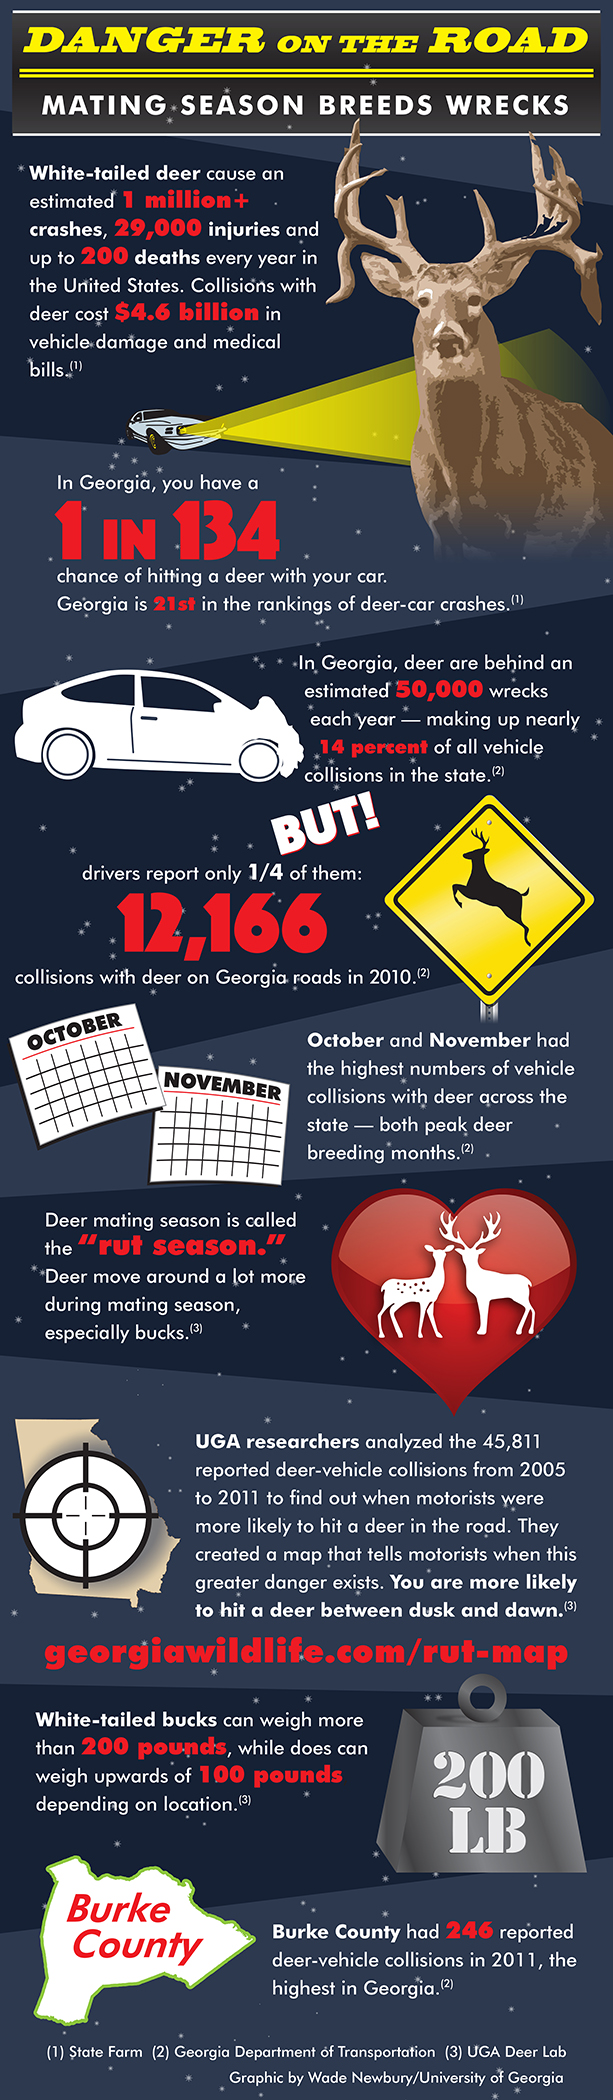 Deer mating season infographic-v.graphic